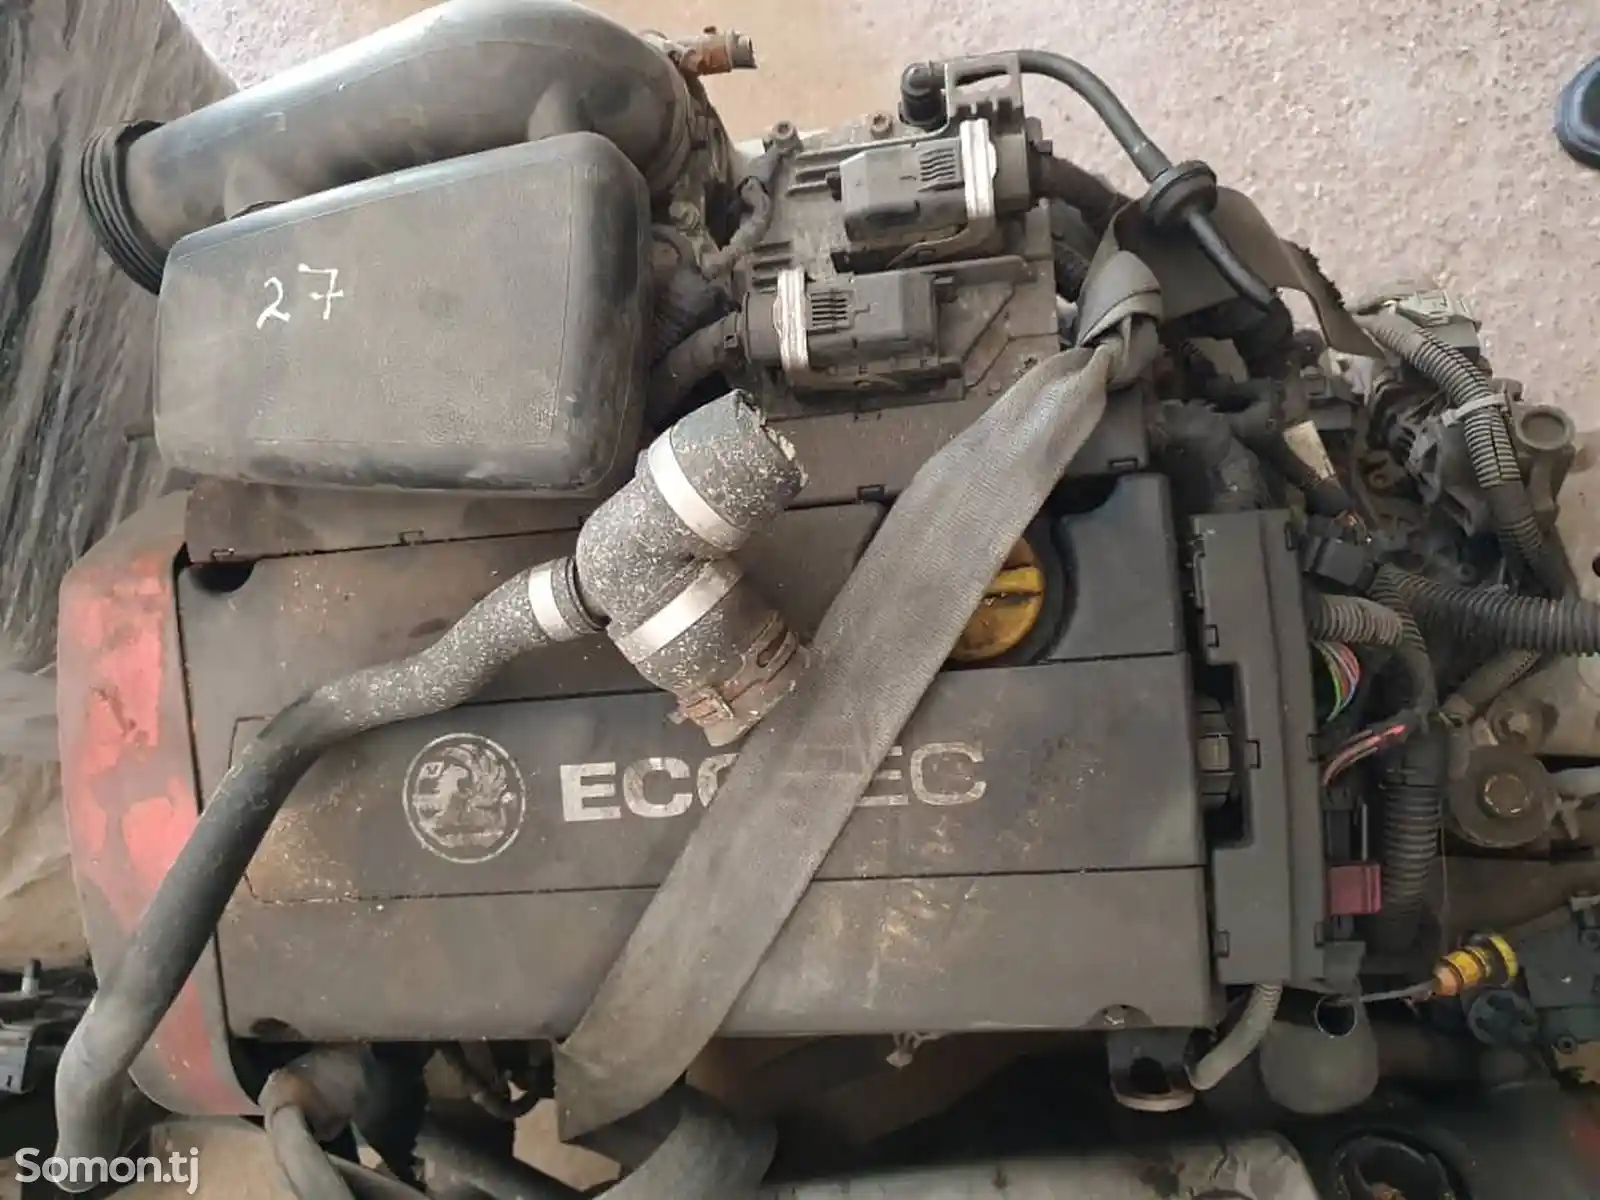 Мотор от Opel 1.6 экотэк